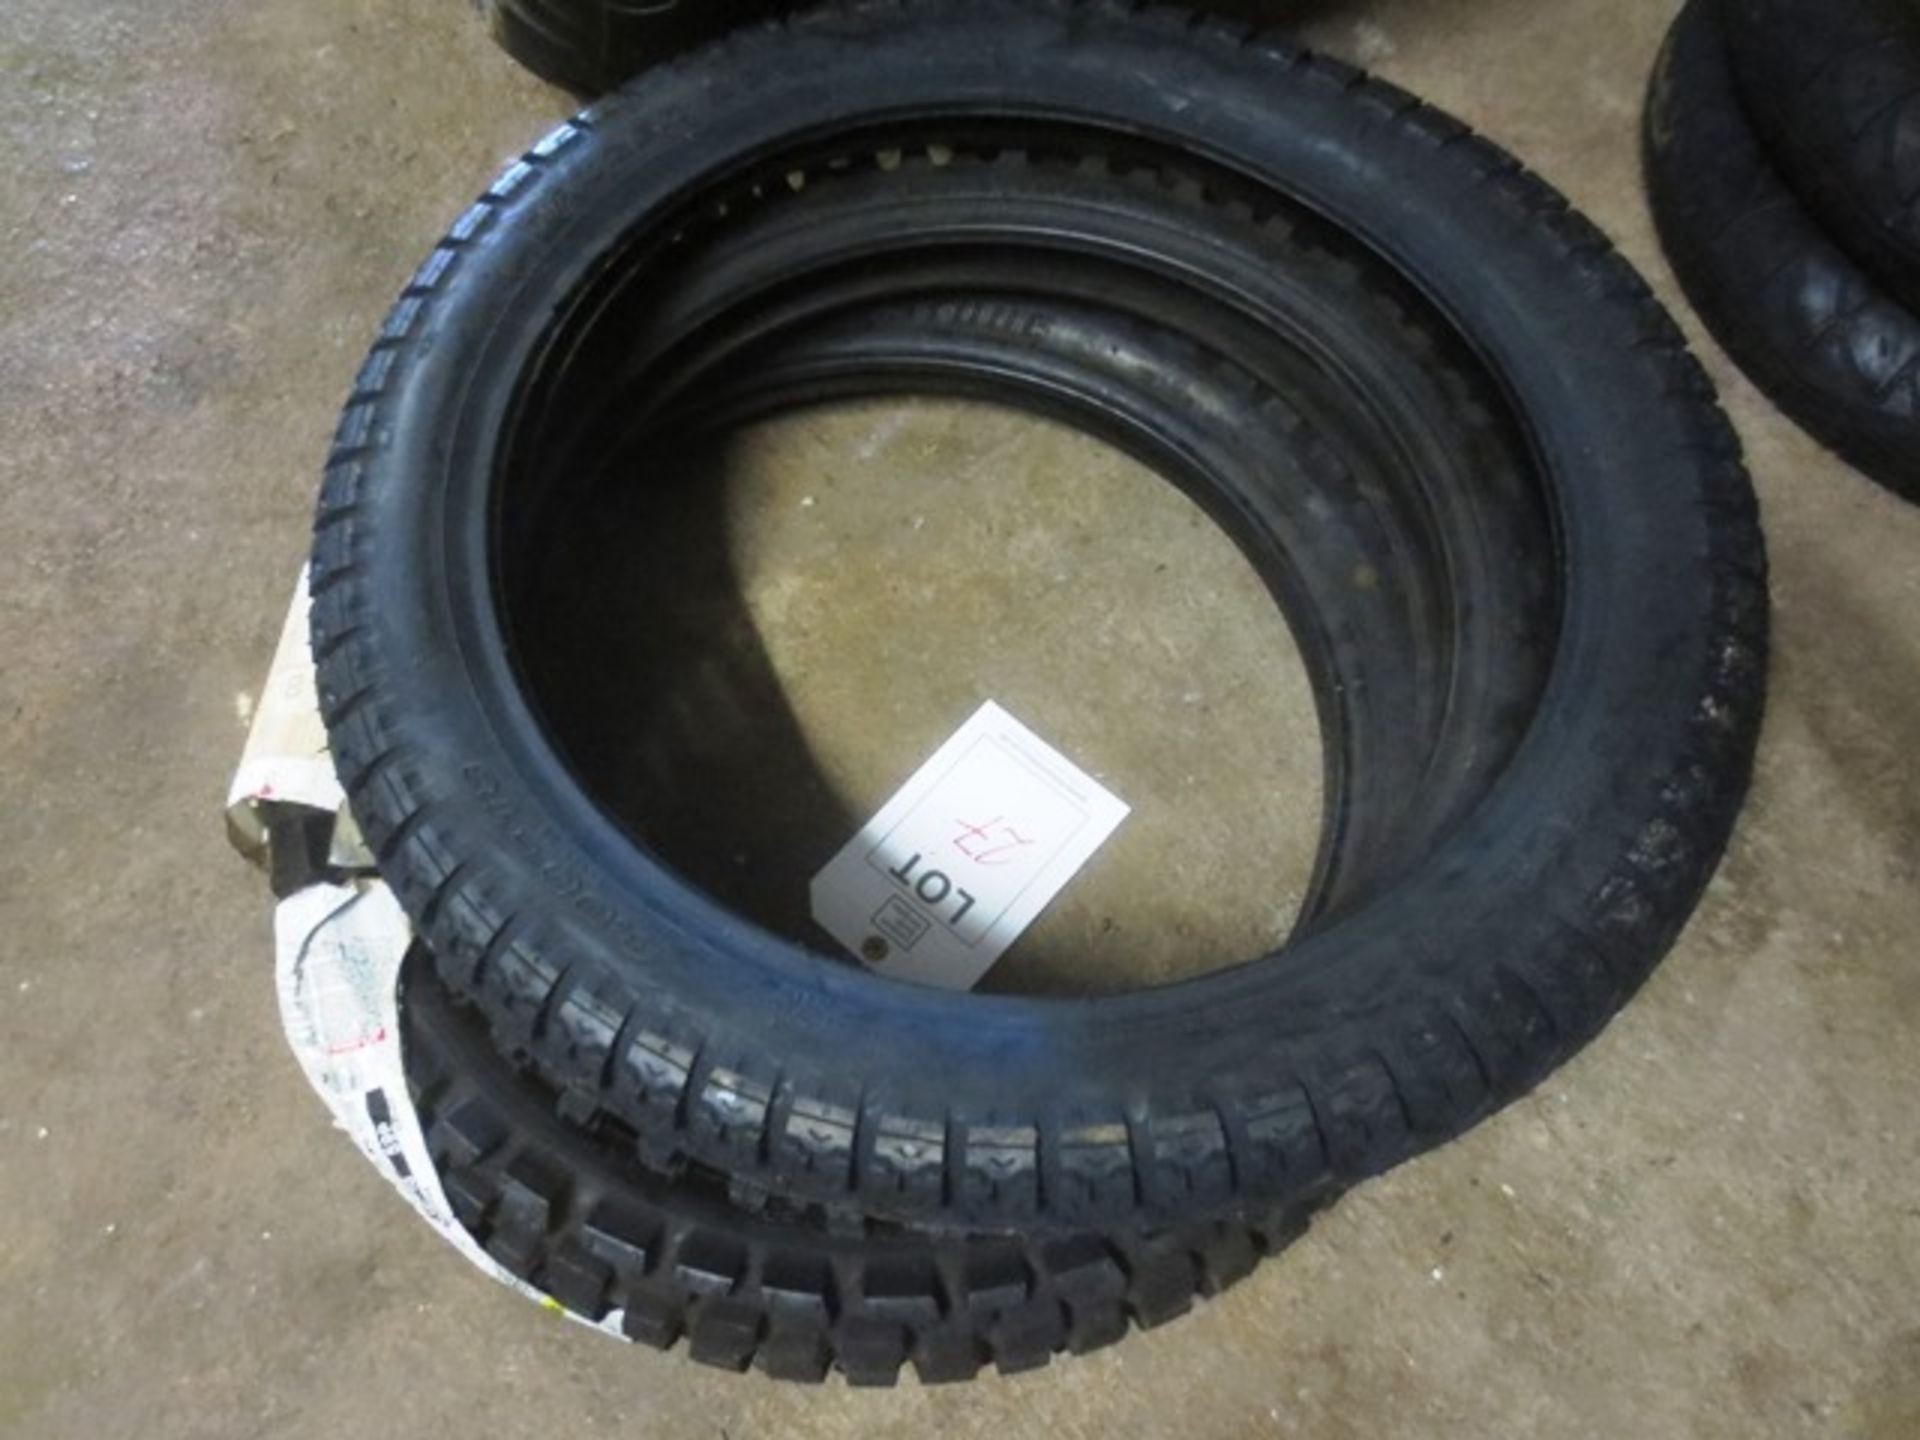 Three various motorcycle tyres, incl. Bridgestone, Tailwing TW302 4.10-18 59P, Crossfront 70-100-